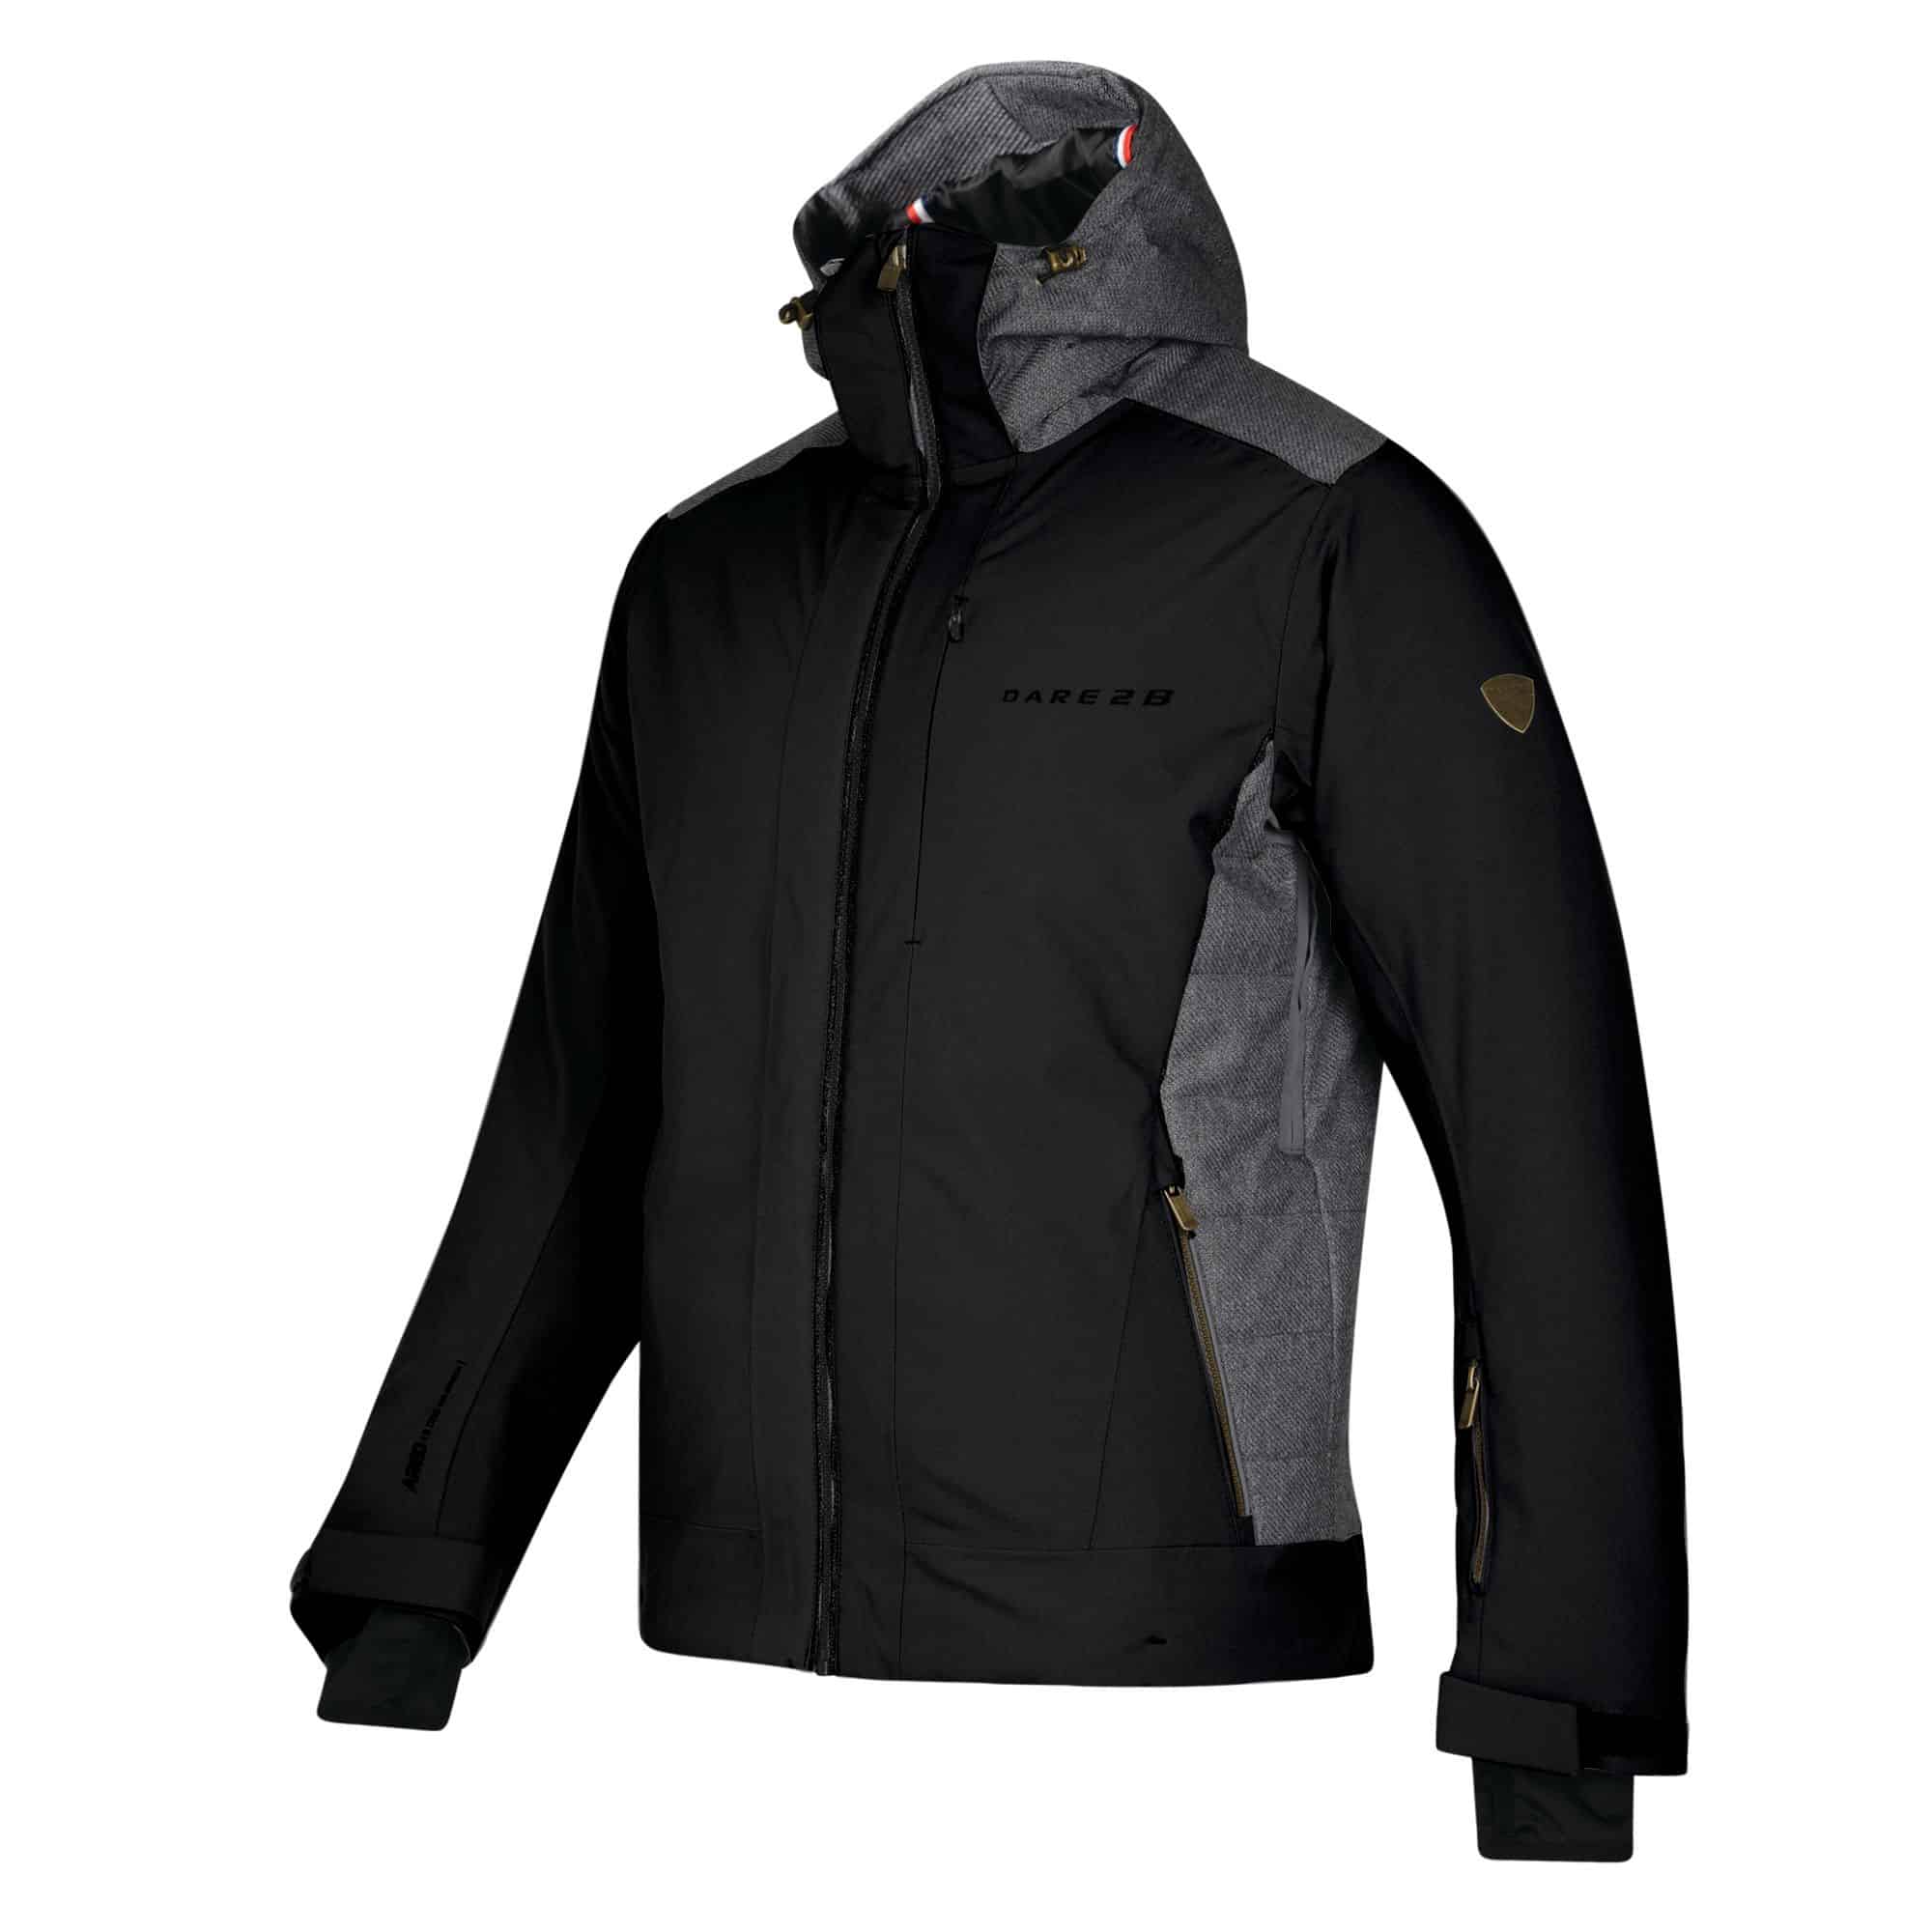 rendition 1718 jacket black and grey